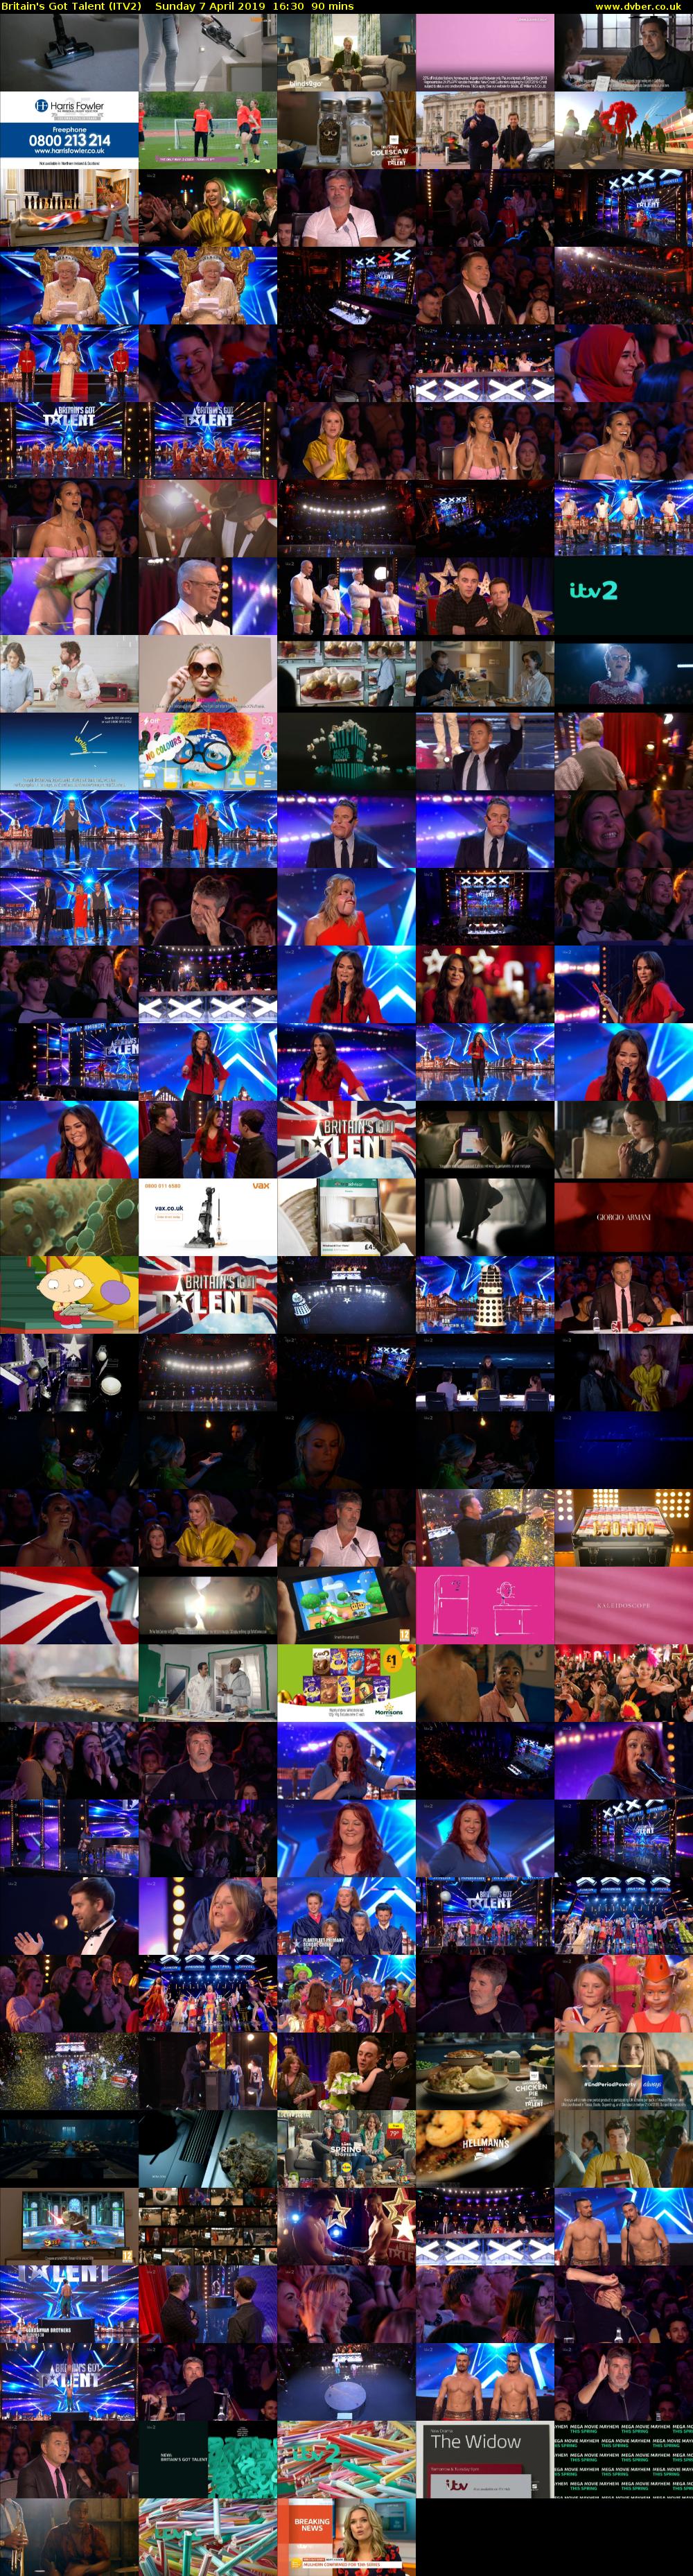 Britain's Got Talent (ITV2) Sunday 7 April 2019 16:30 - 18:00